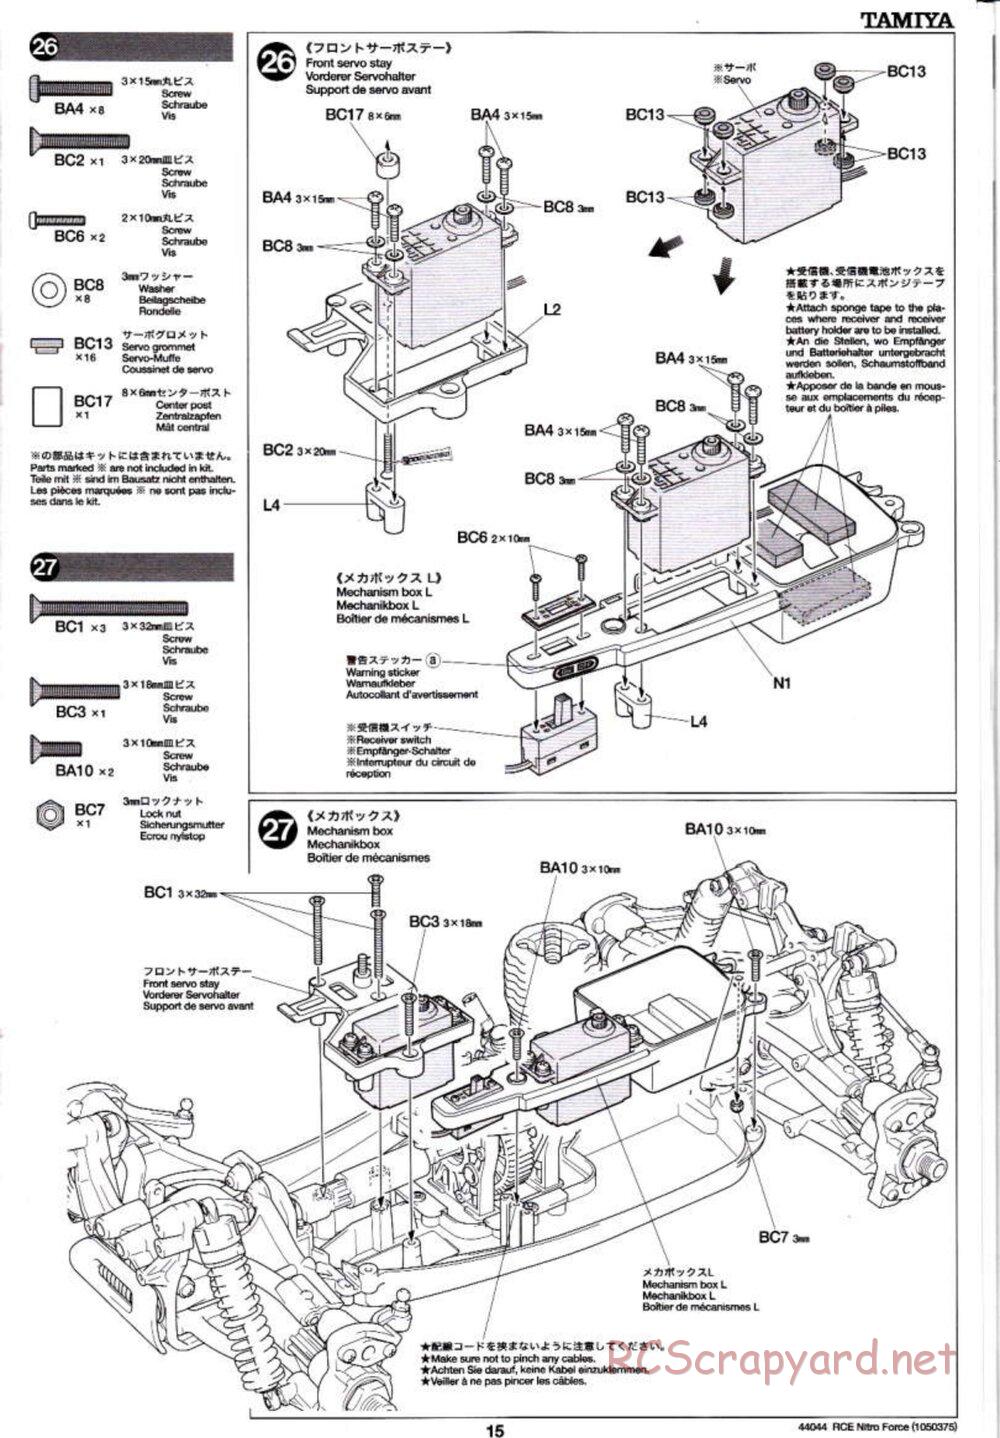 Tamiya - Nitro Force - NDF-01 Chassis - Manual - Page 15